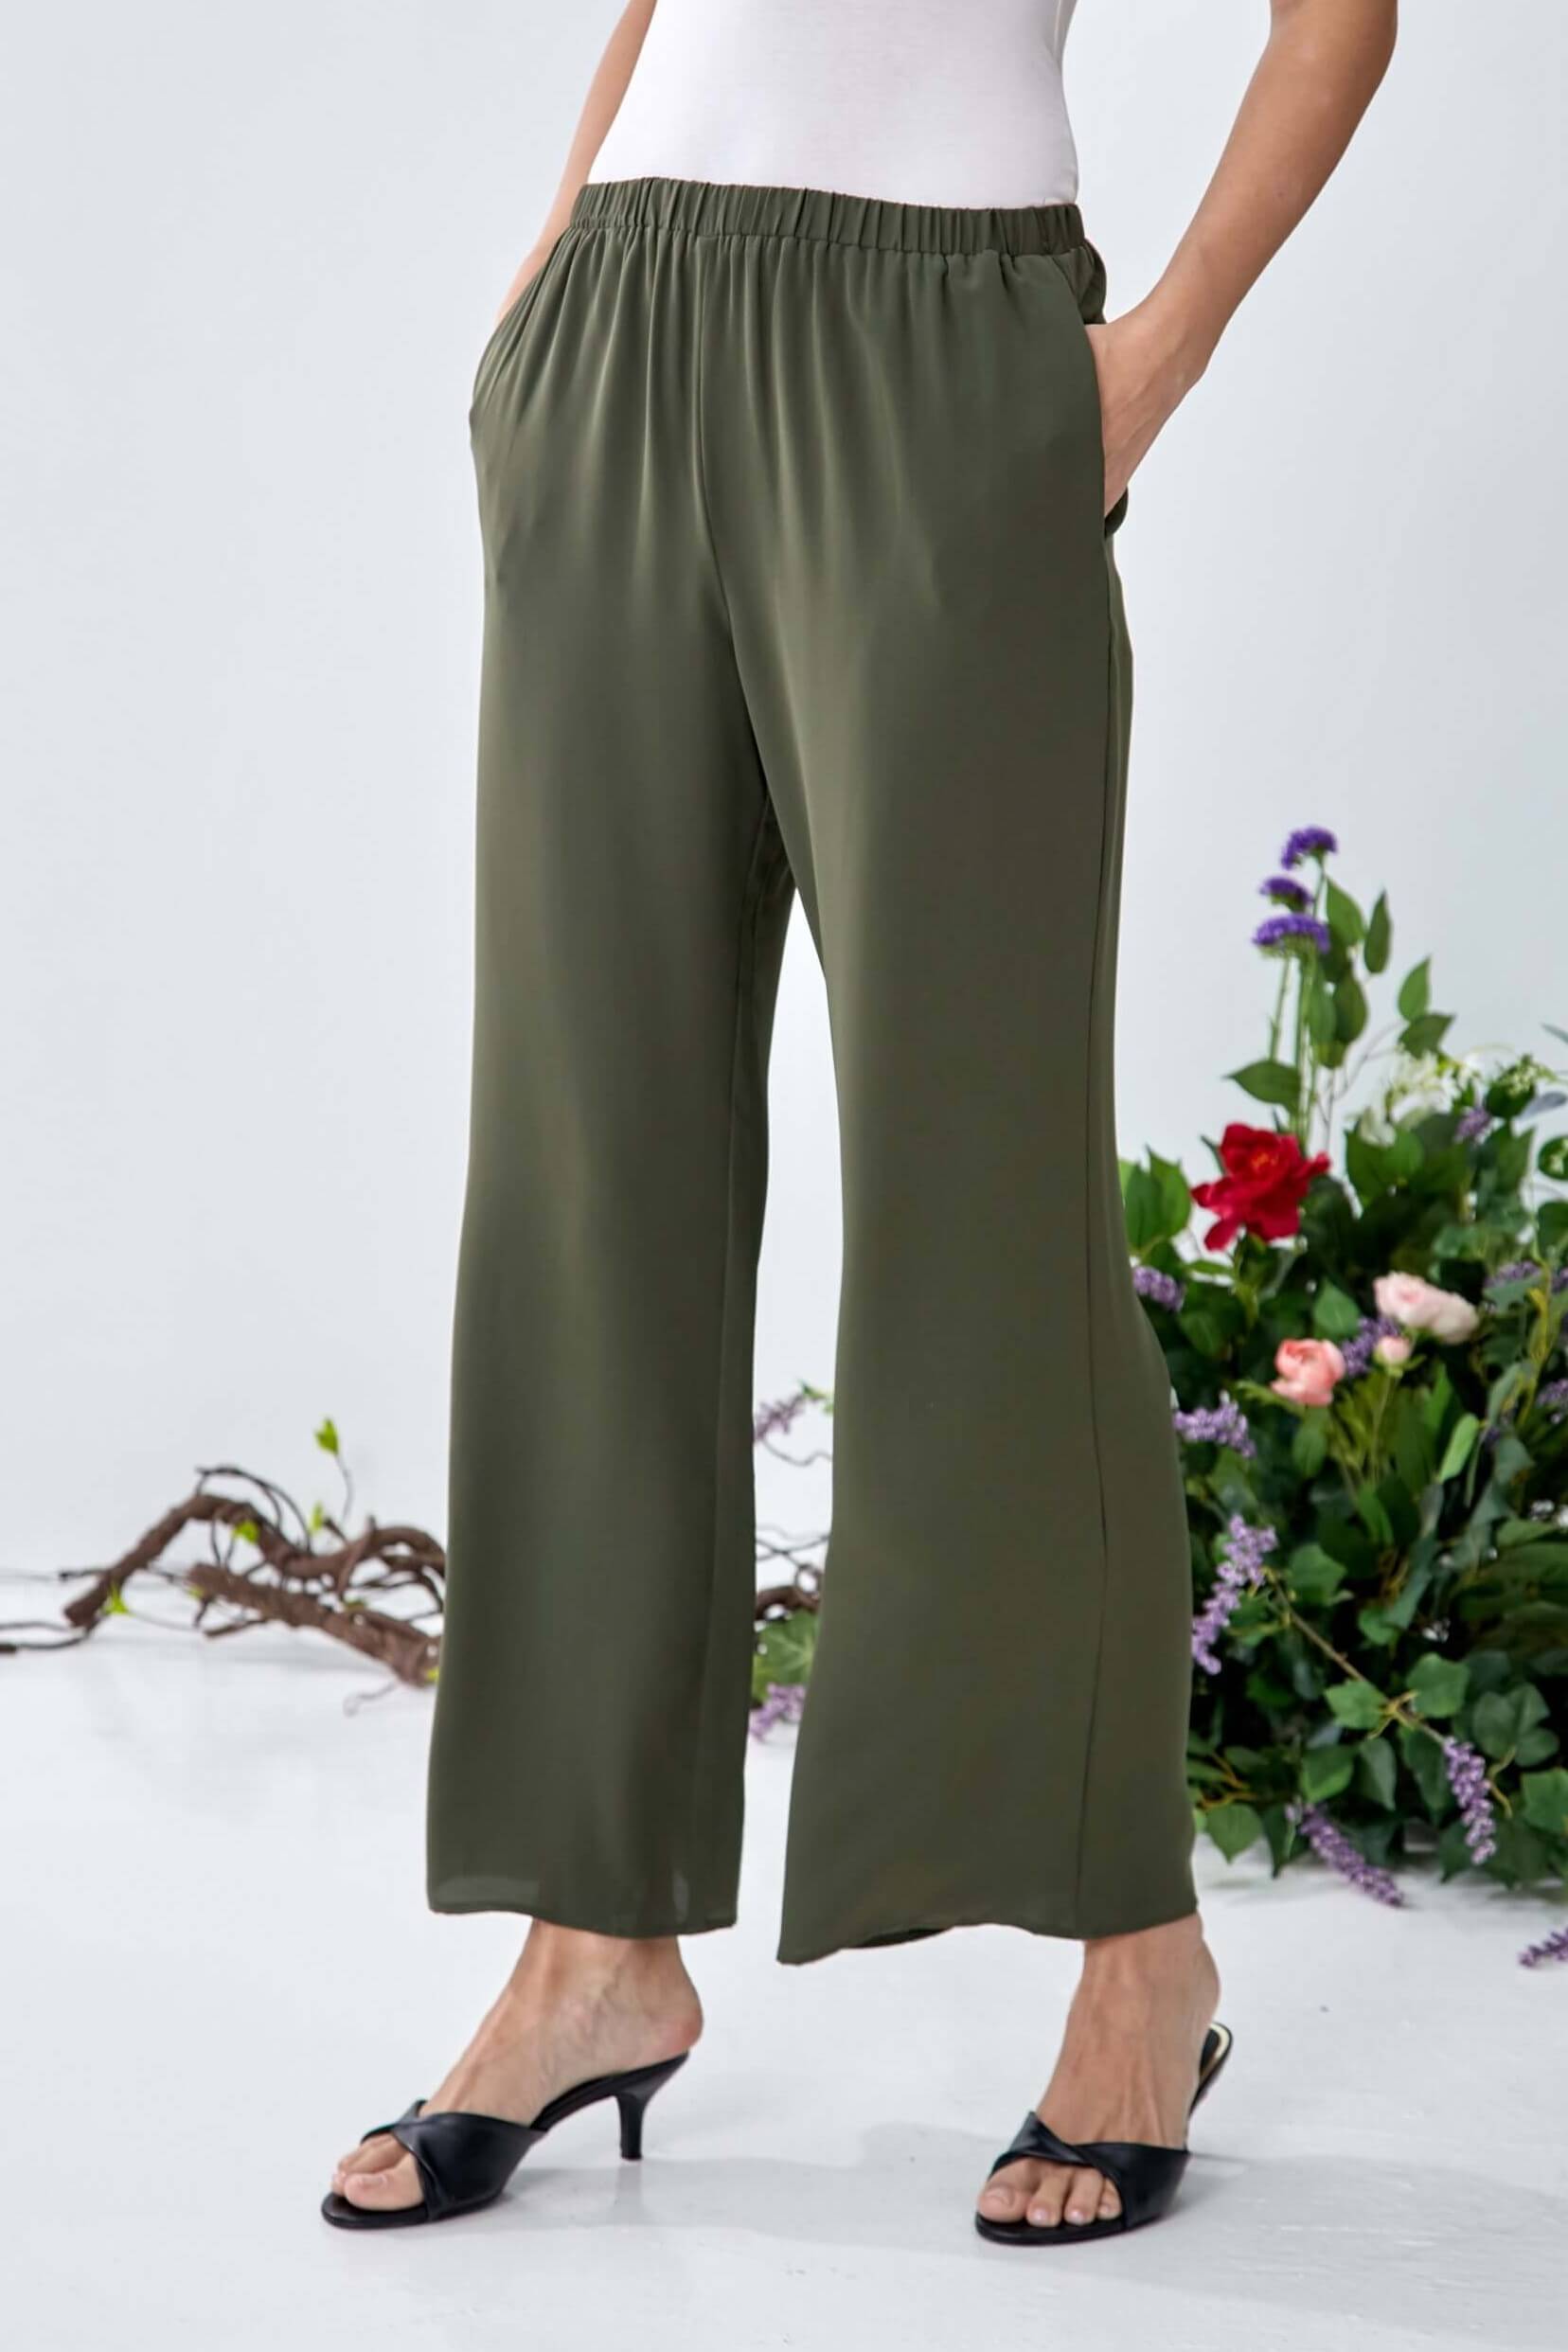 Zara Olive Tunic Blouse + Wide Leg Pants (1)